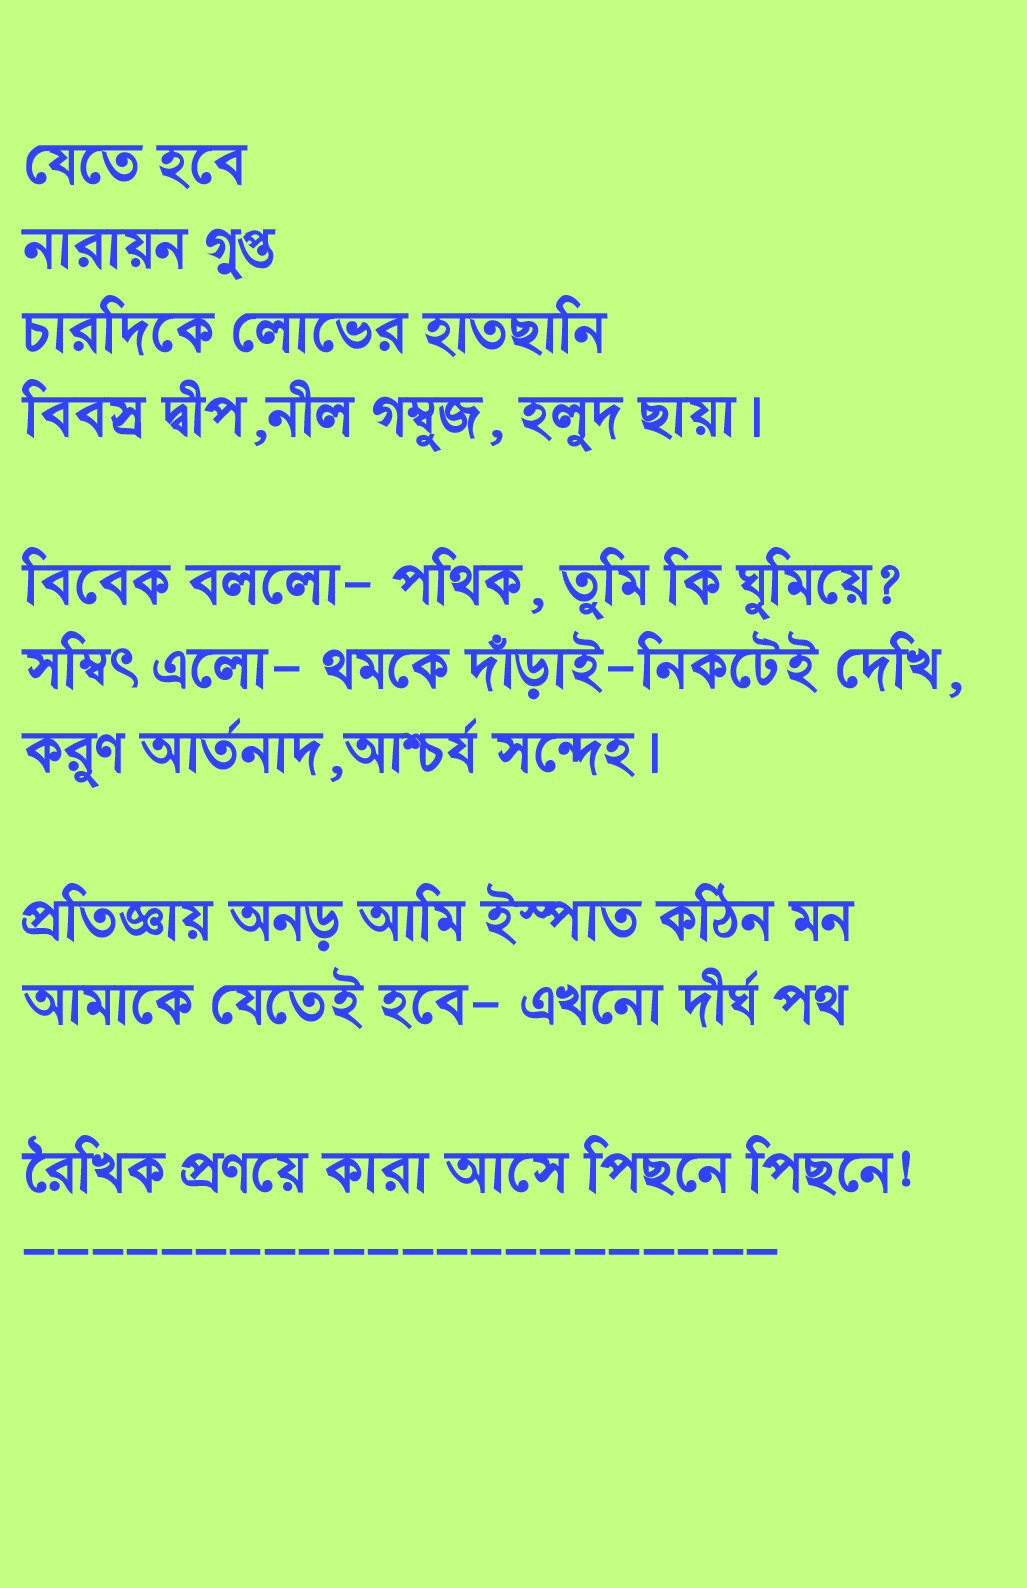 Love SMS in Hindi Messages in Marathi Bangla in Urdu Engslih for Girlfriend Messages Marathi